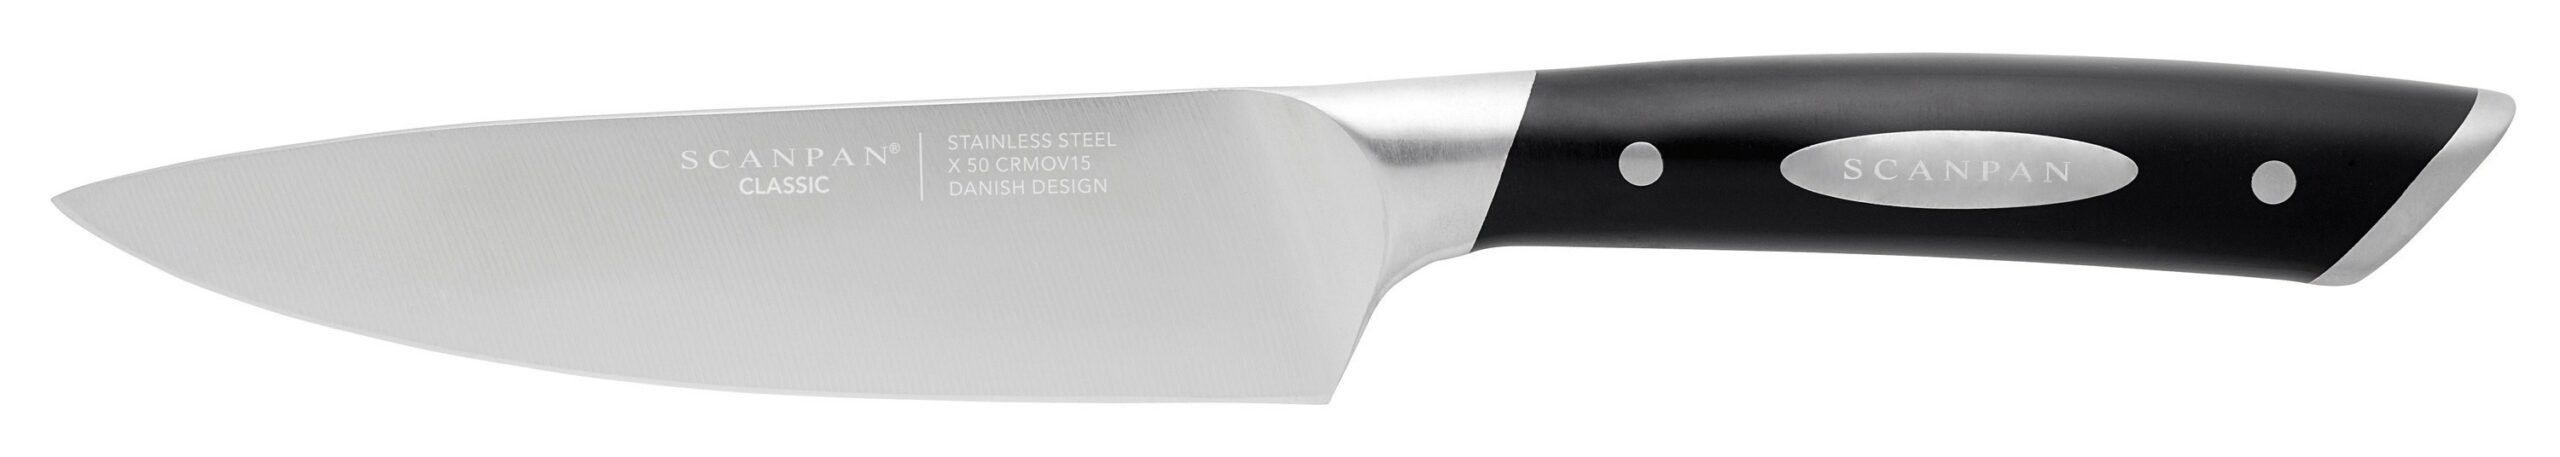 Scanpan Classic Chefs Knife 15cm